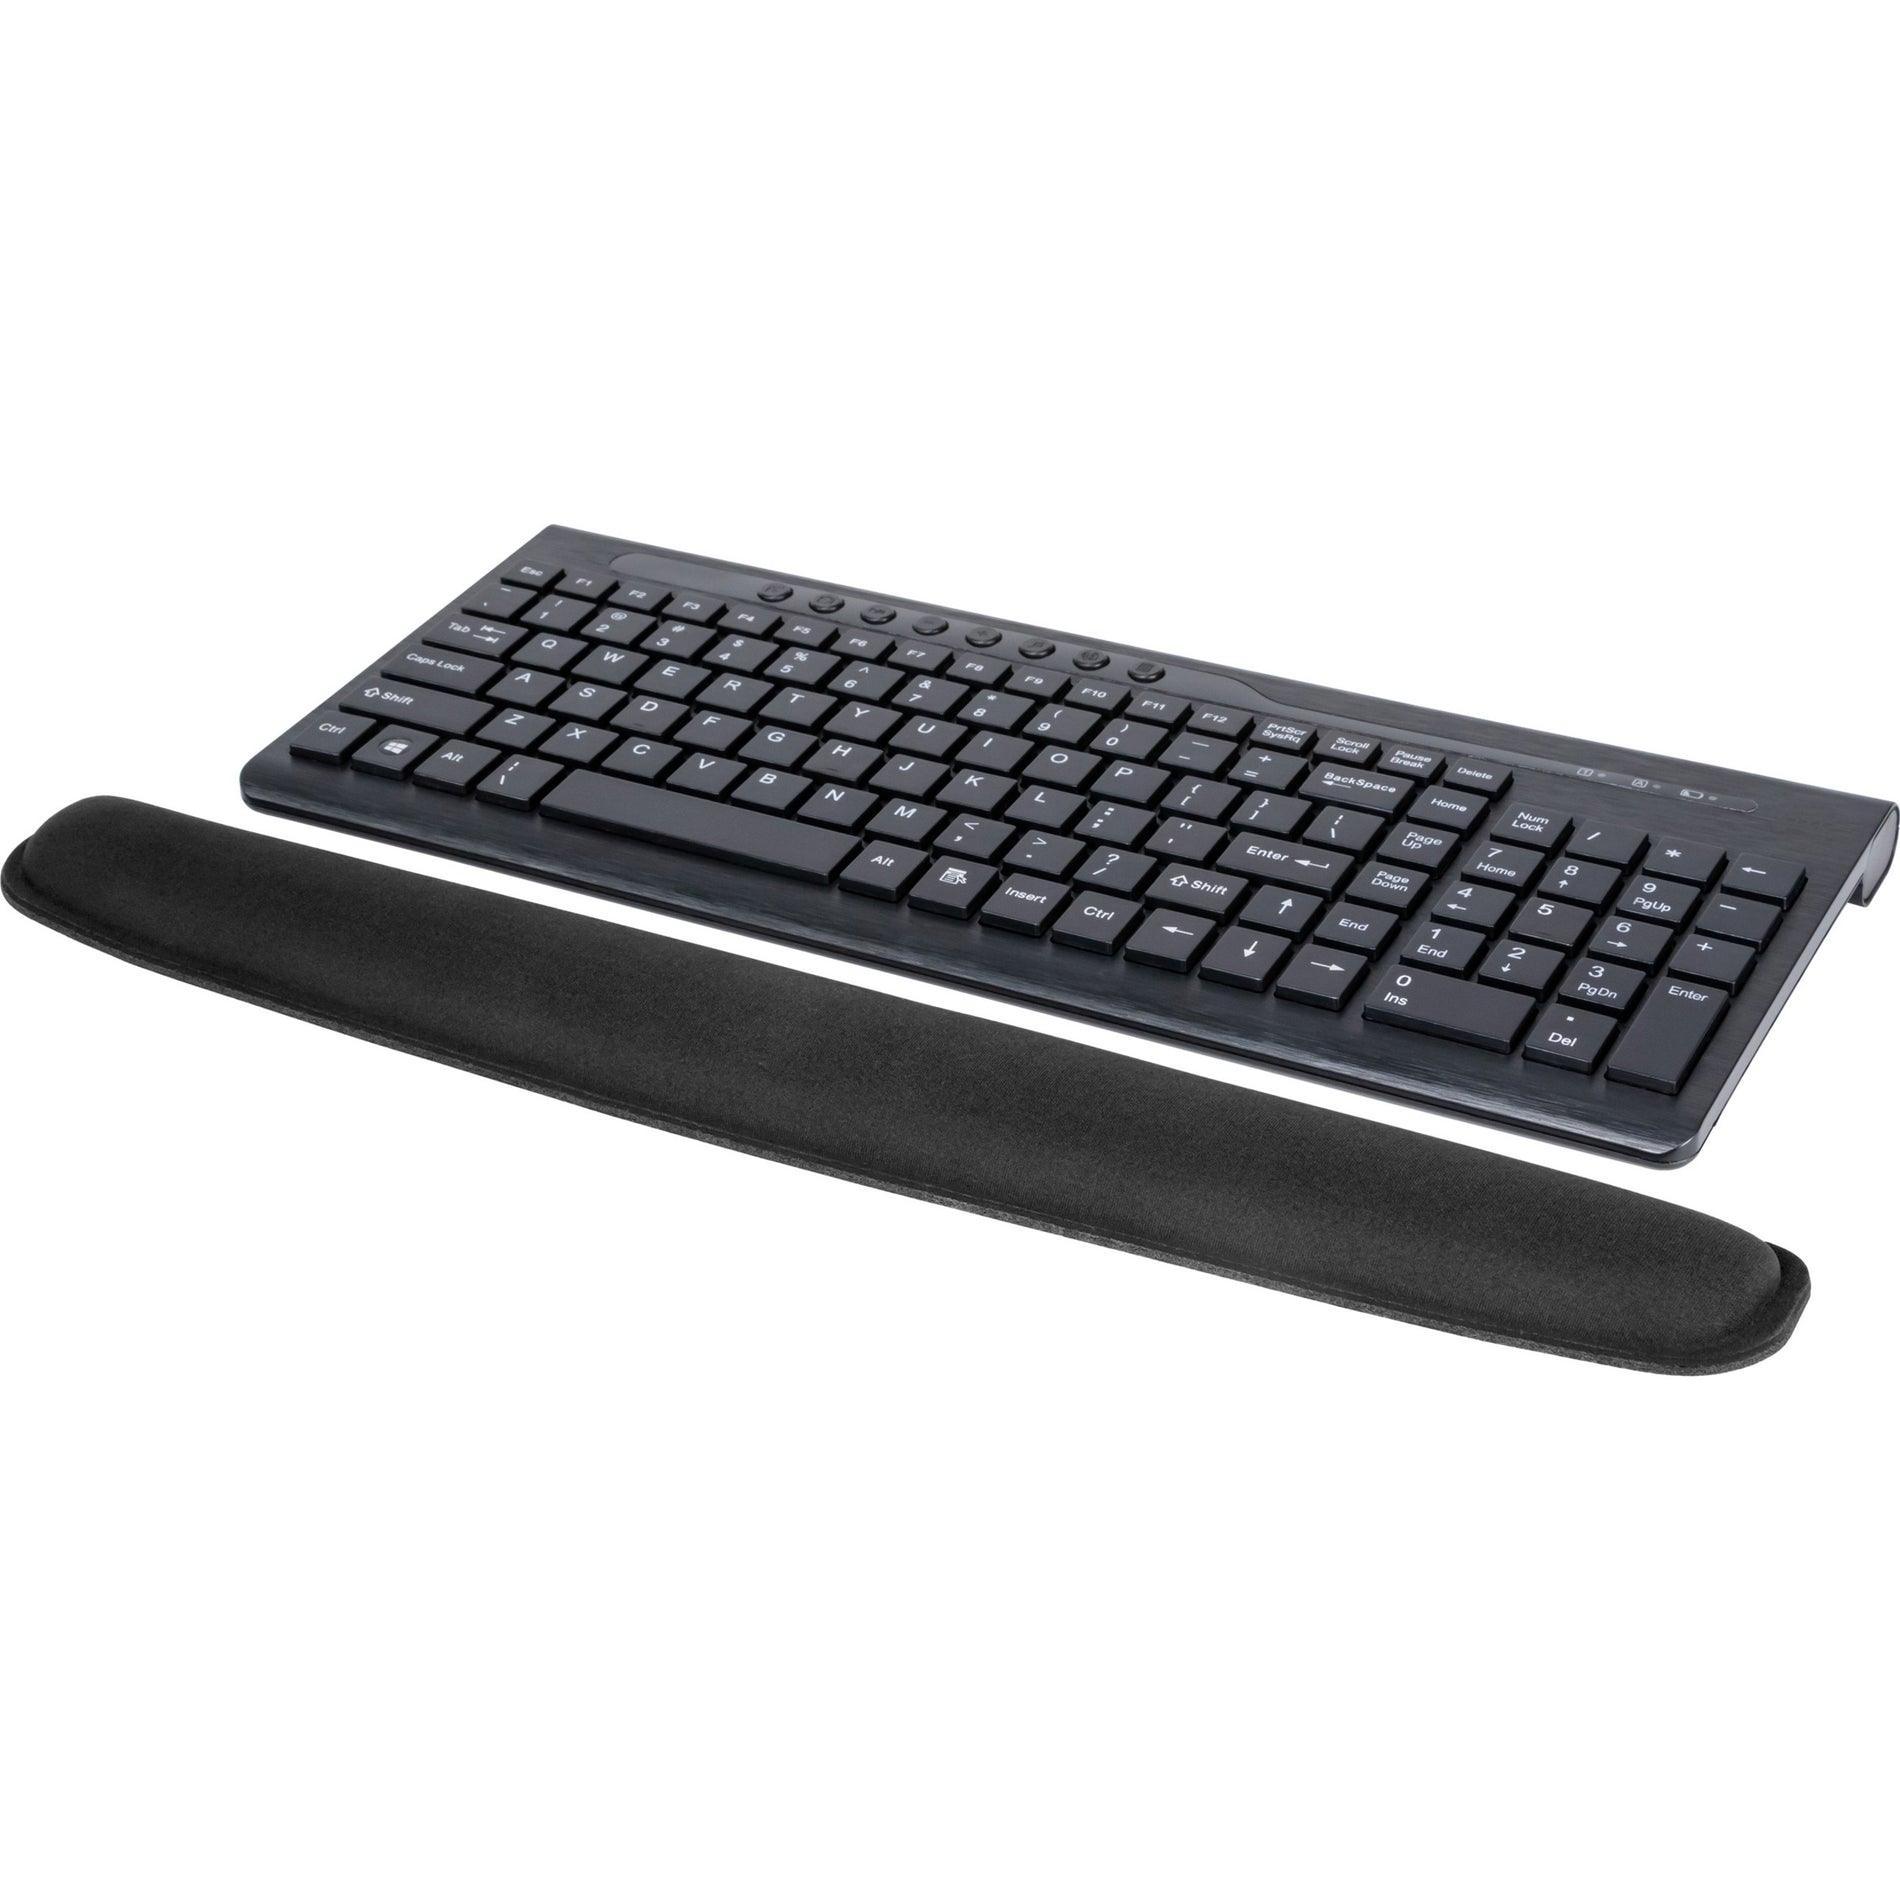 Allsop 30205 Memory Foam Wrist Rest - Black, Comfortable, Non-skid, Ergonomic Keyboard Pad